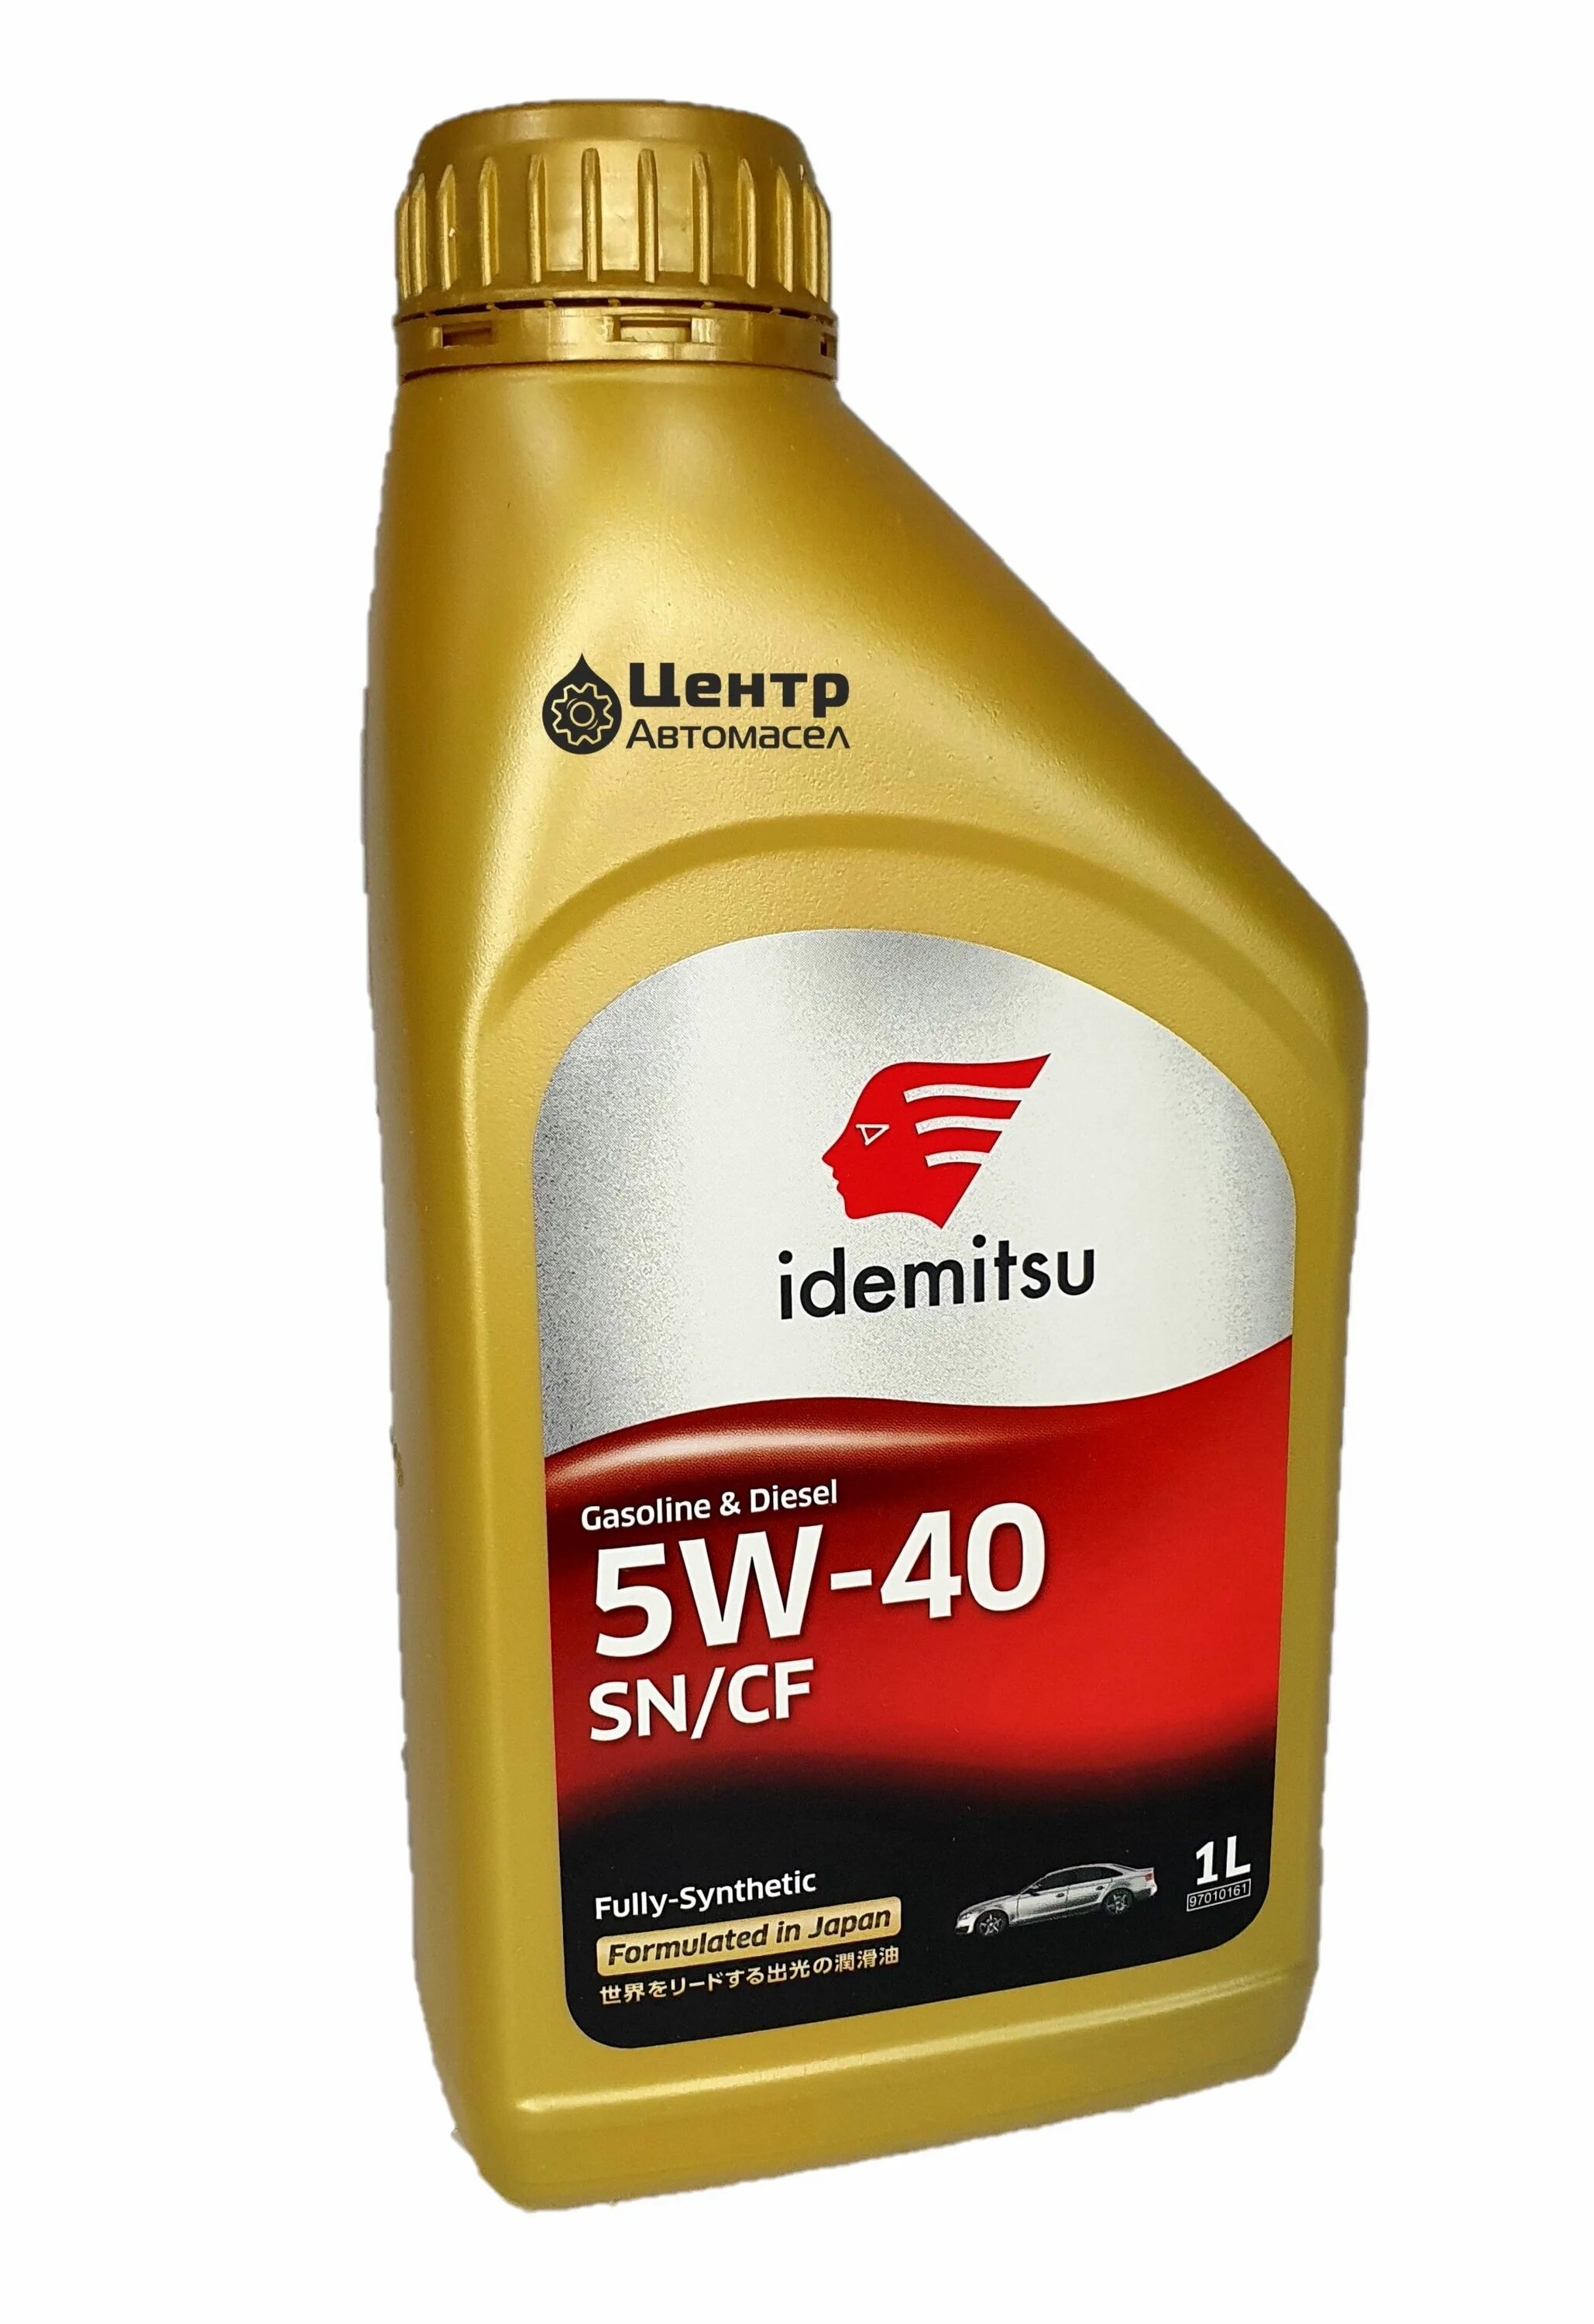 Idemitsu SN/CF 5w-40 1л. 30015192746 Idemitsu. Idemitsu 5w40 SN/CF Oil Club. Моторное масло Idemitsu Semi-Synthetic SN/CF 10w-40 1л для мотоциклов. Масло 5w40 идумицу